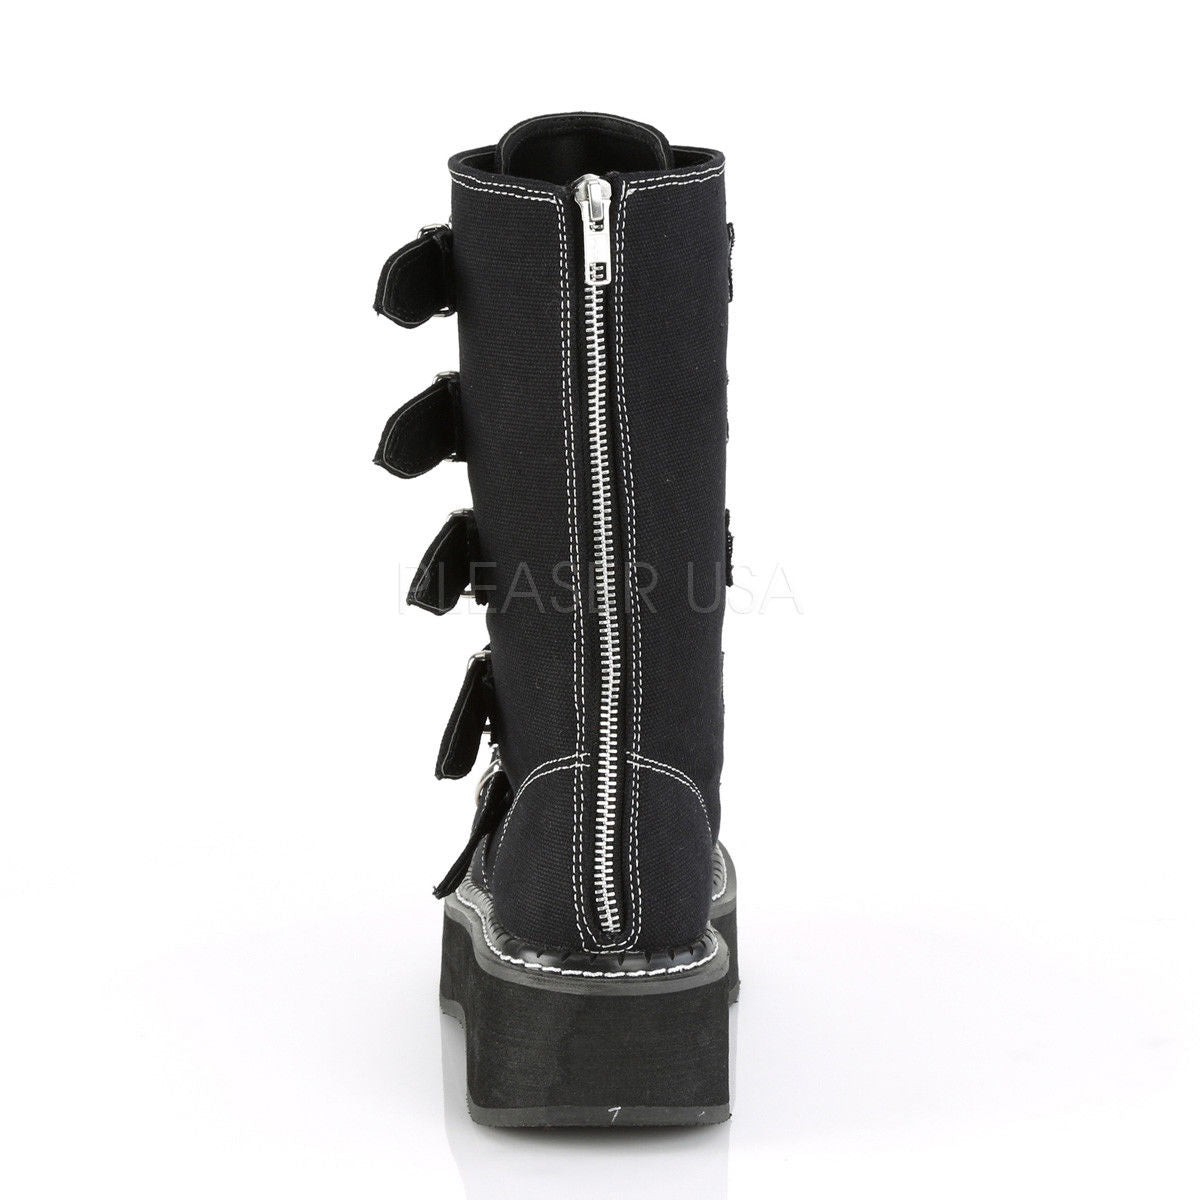 DEMONIA Emily-341 Women's Black Canvas Goth 5 Buckle 2" Platforms Mid Calf Boots - A Shoe Addiction